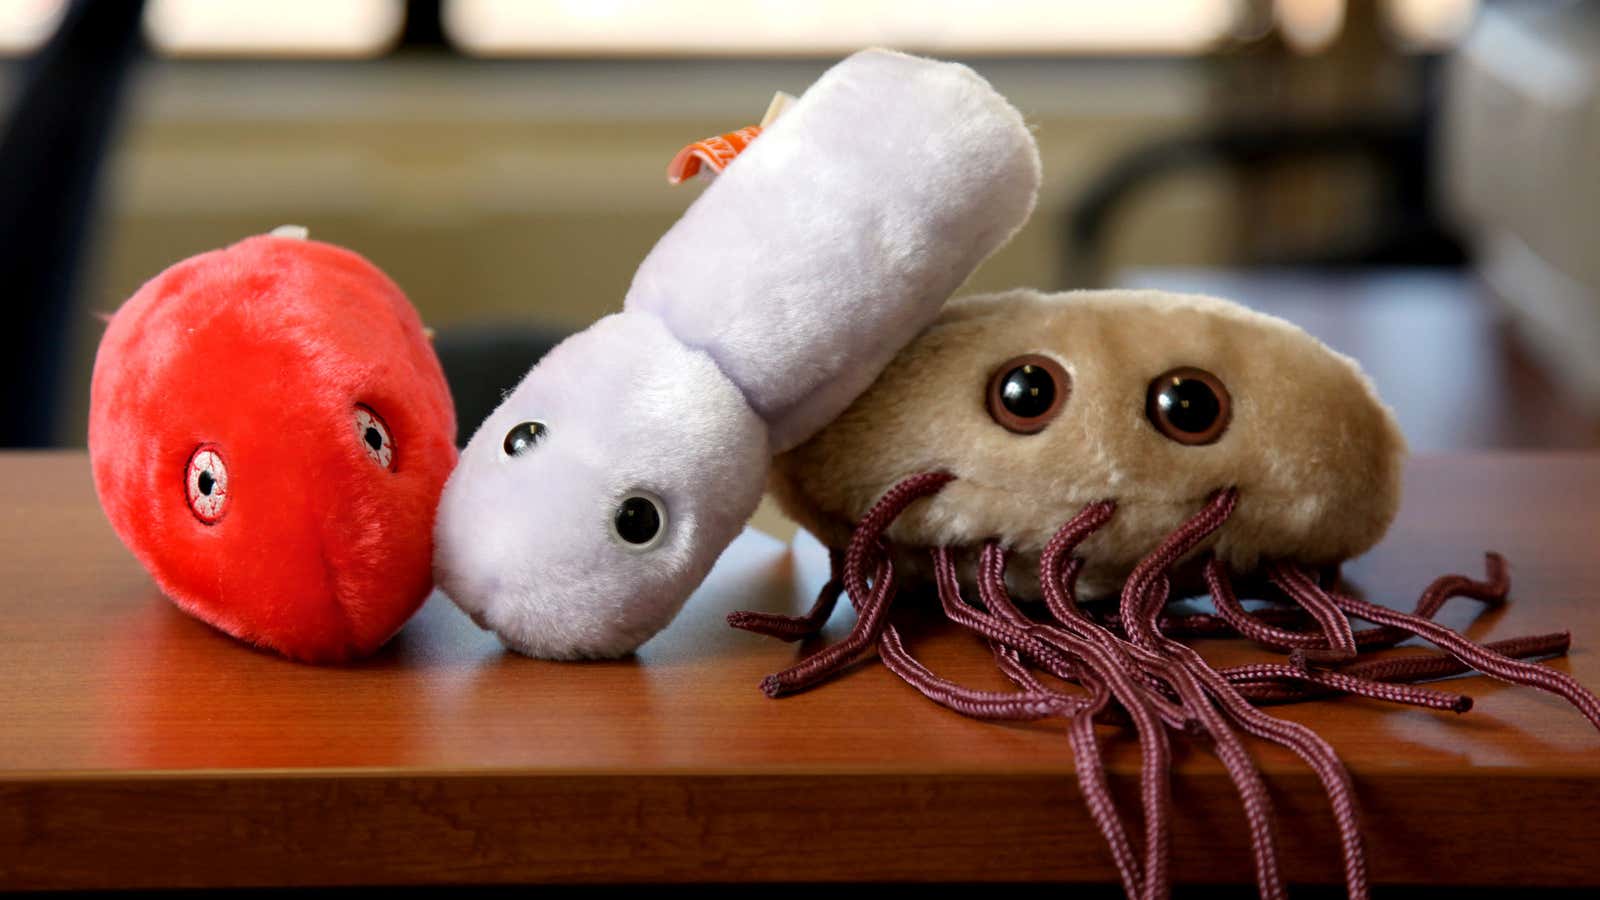 Microbes like buddies too.